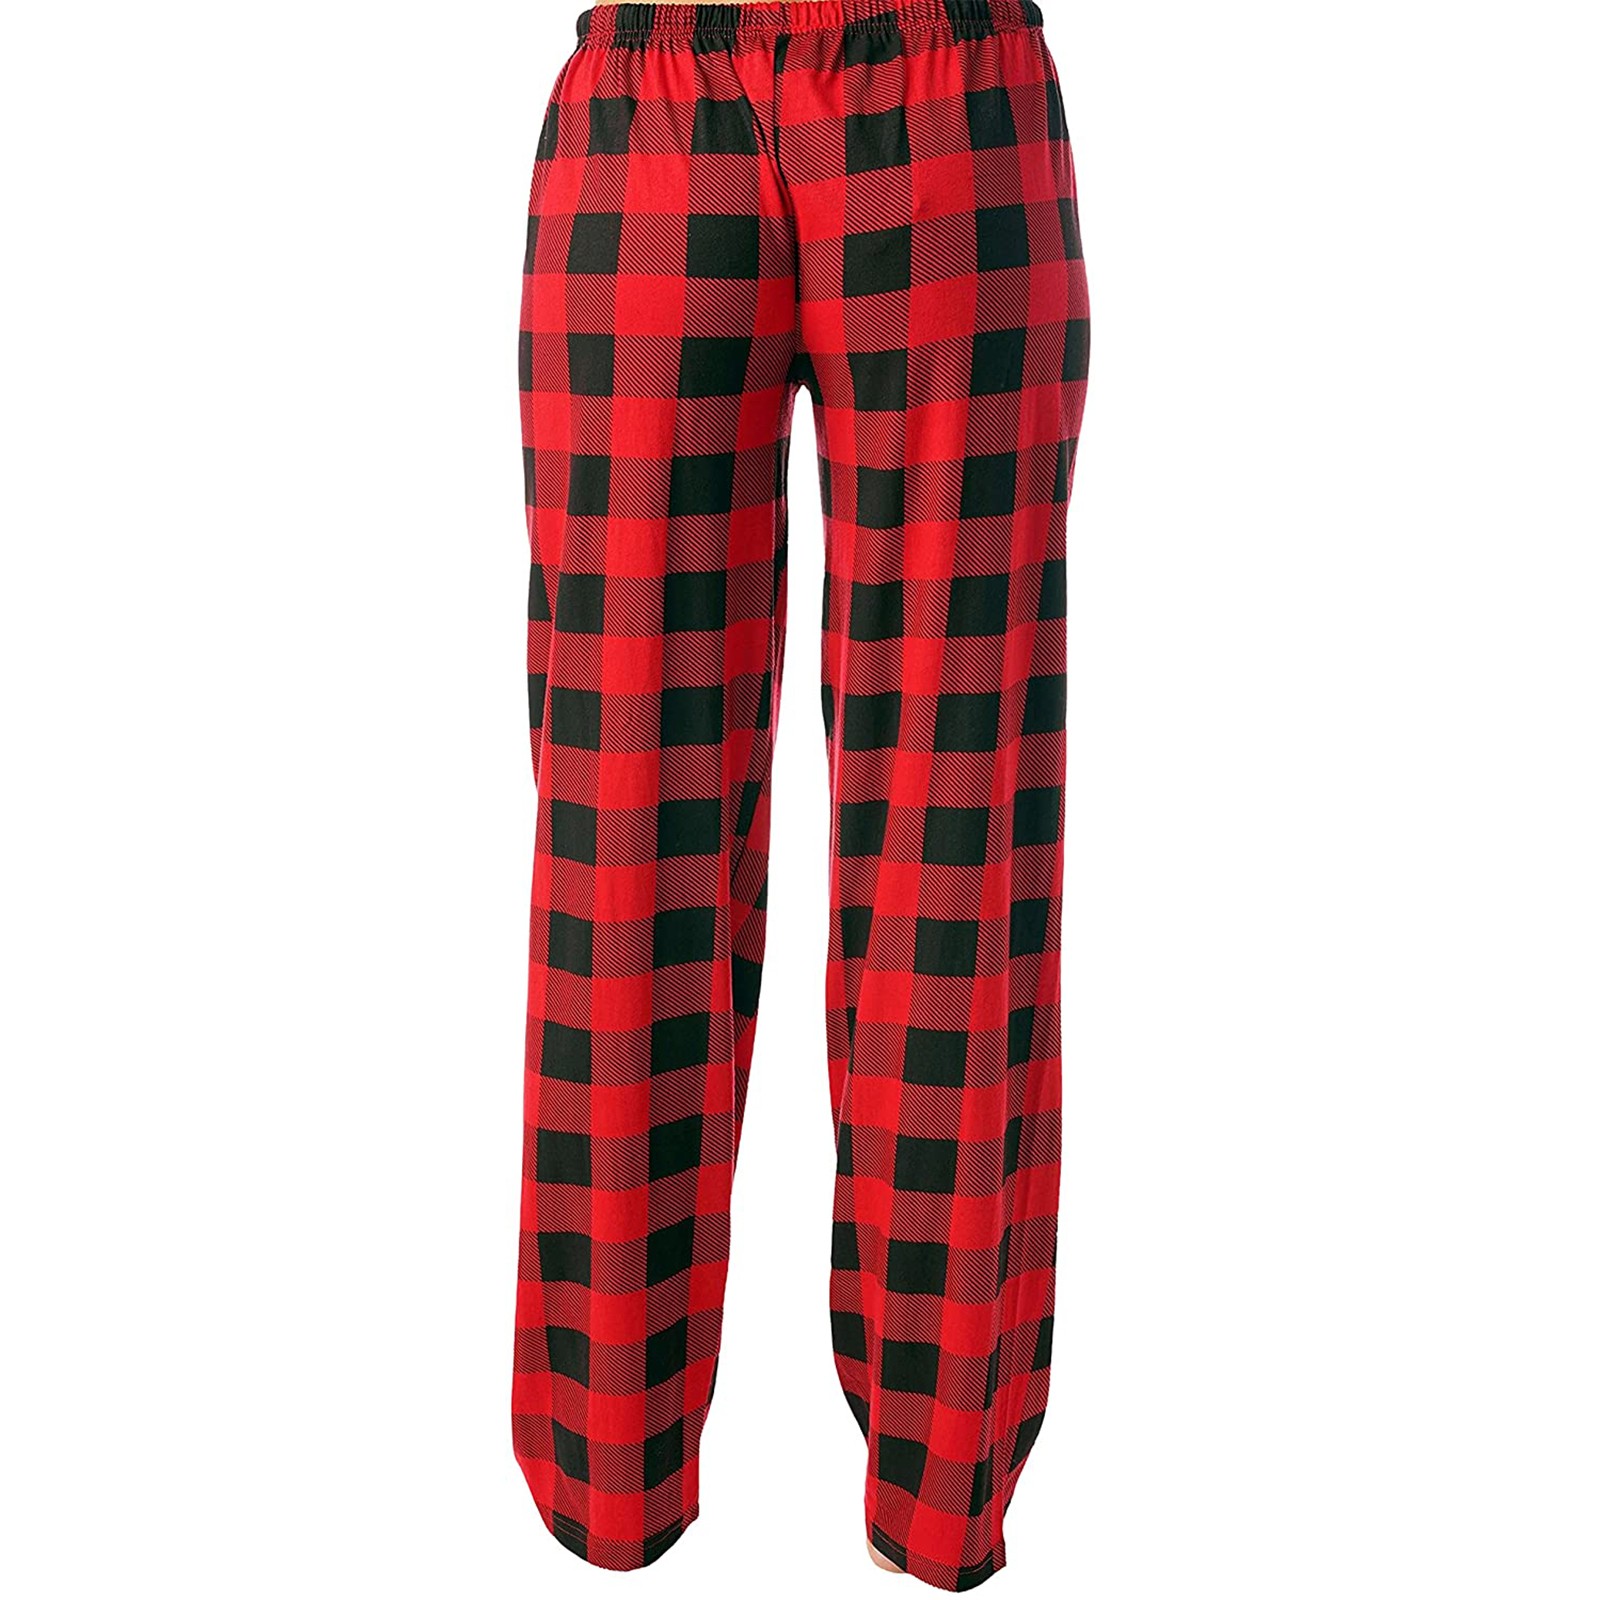 Knosfe Cute Pajama Pants Fuzzy Winter Plaid Pj Pants for Teen Girls ...